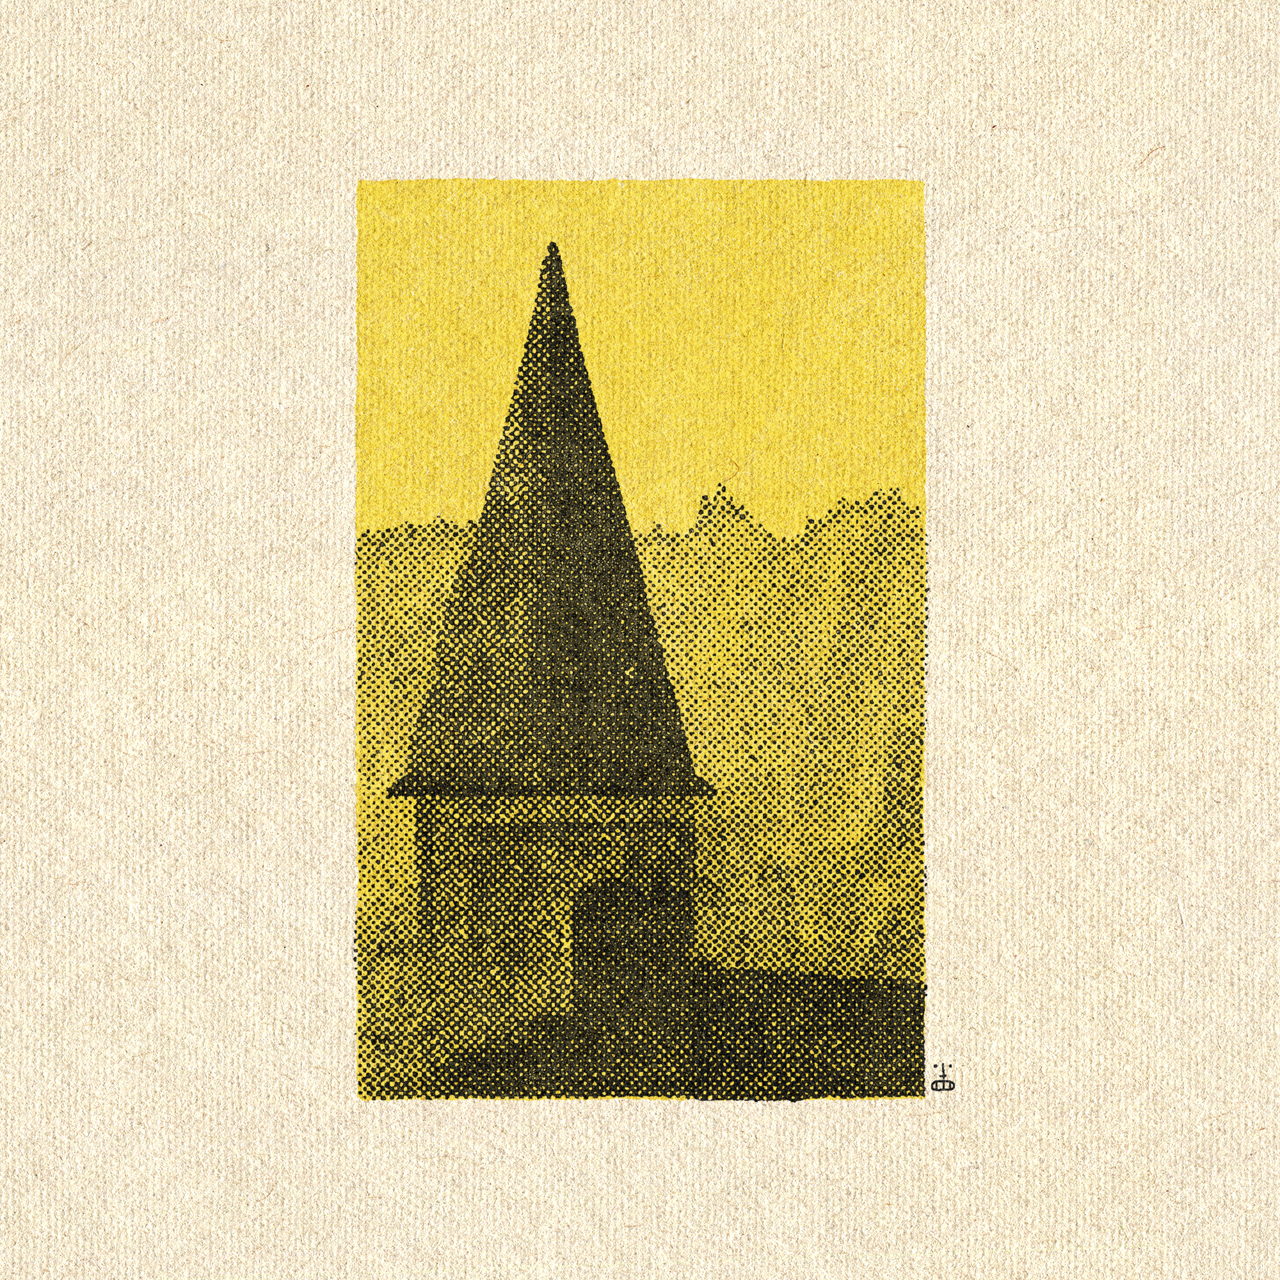 CMYKWRX#03 - Lone spire